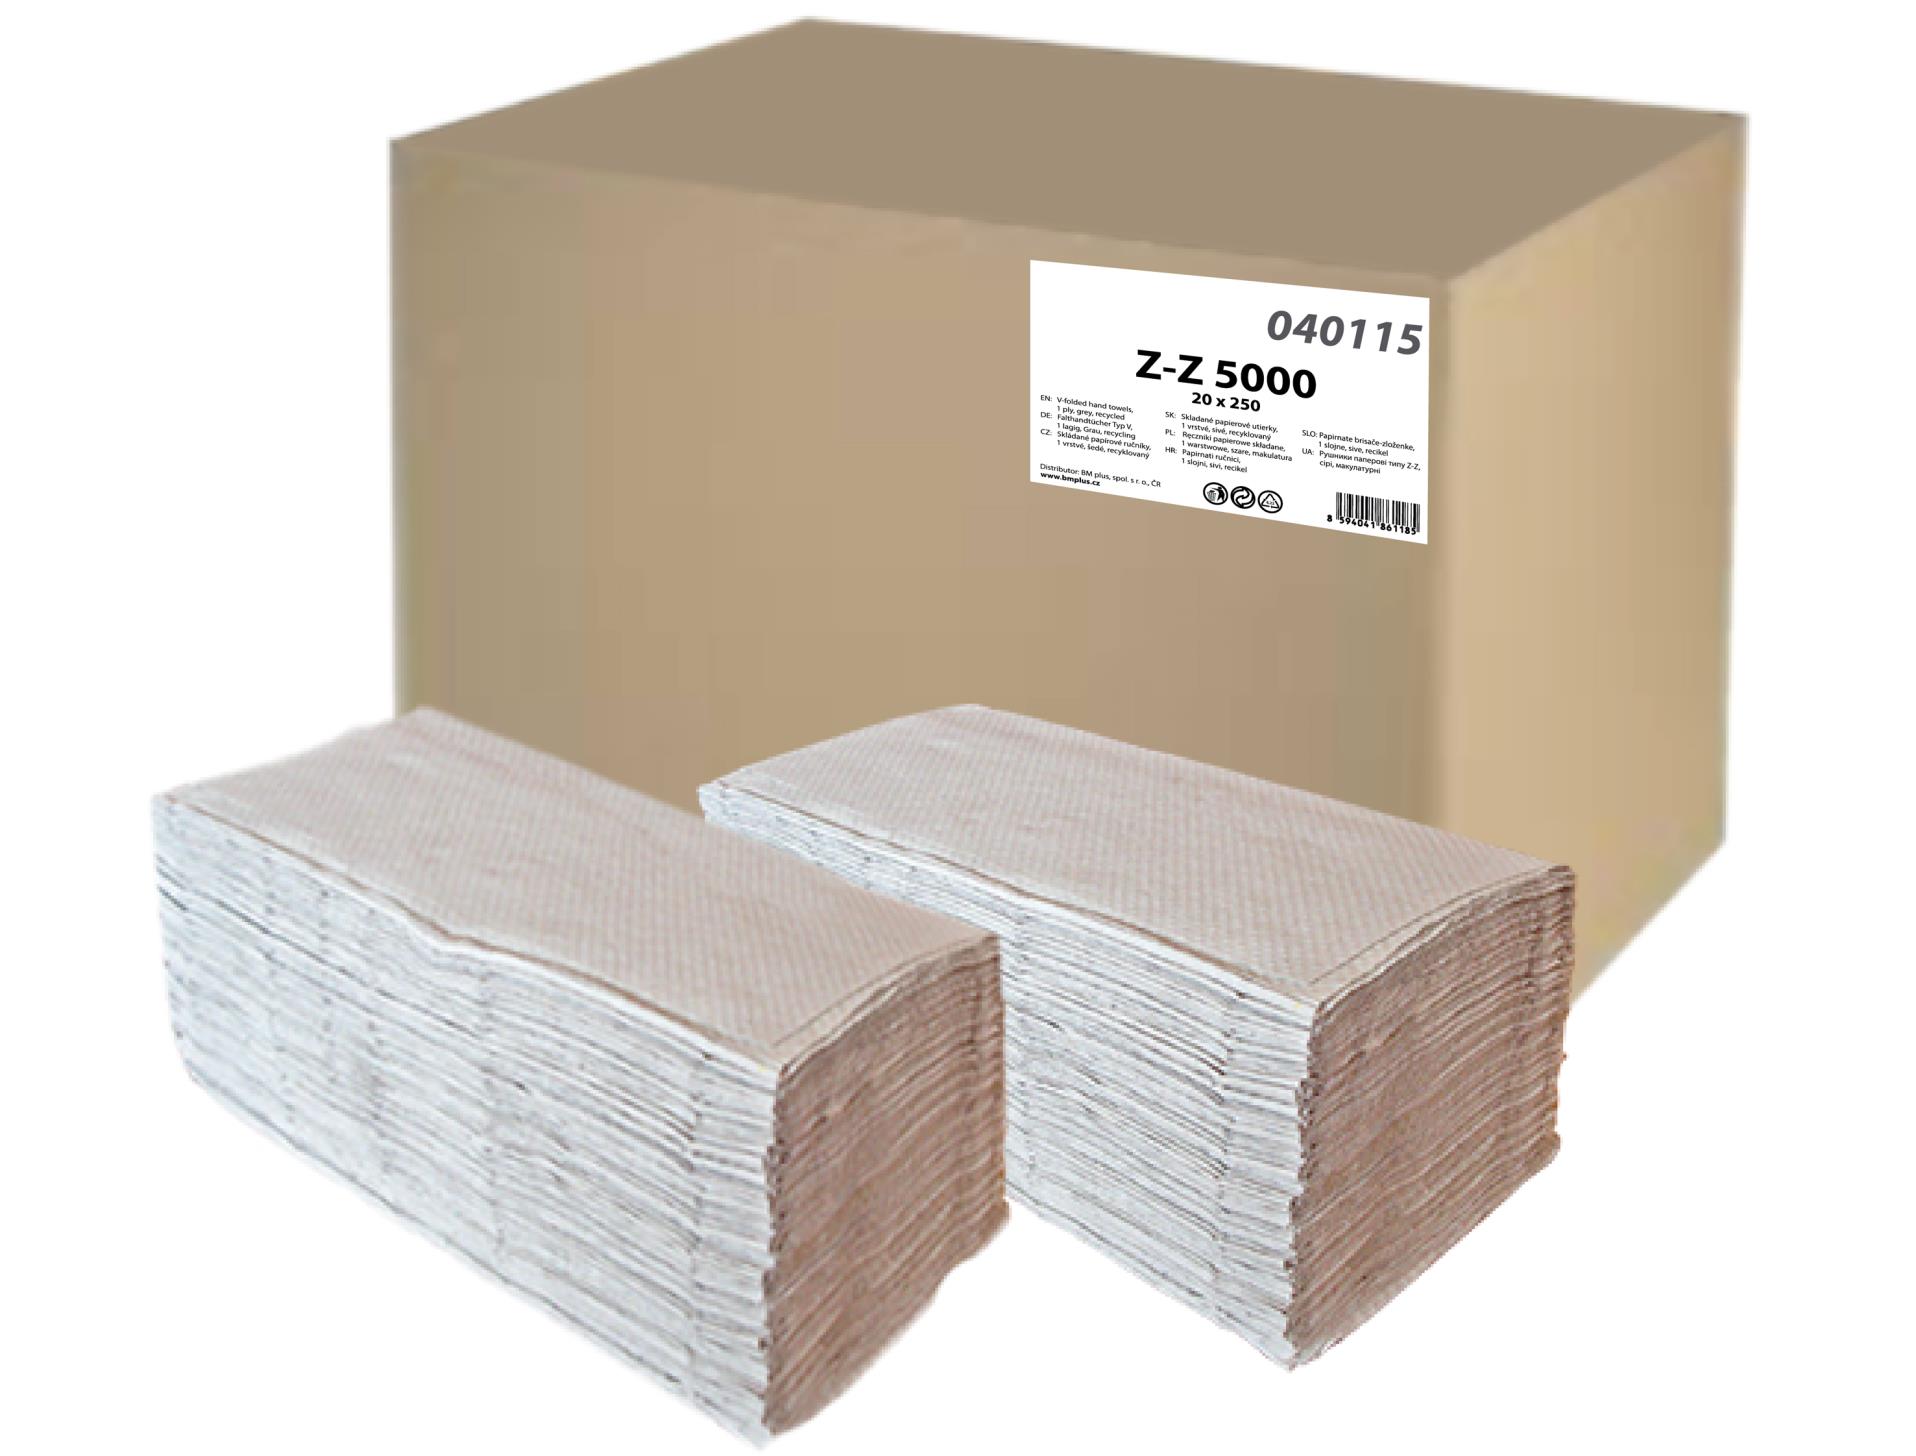 Papírové ručníky - jednovrstvé, šedé, 250 ks